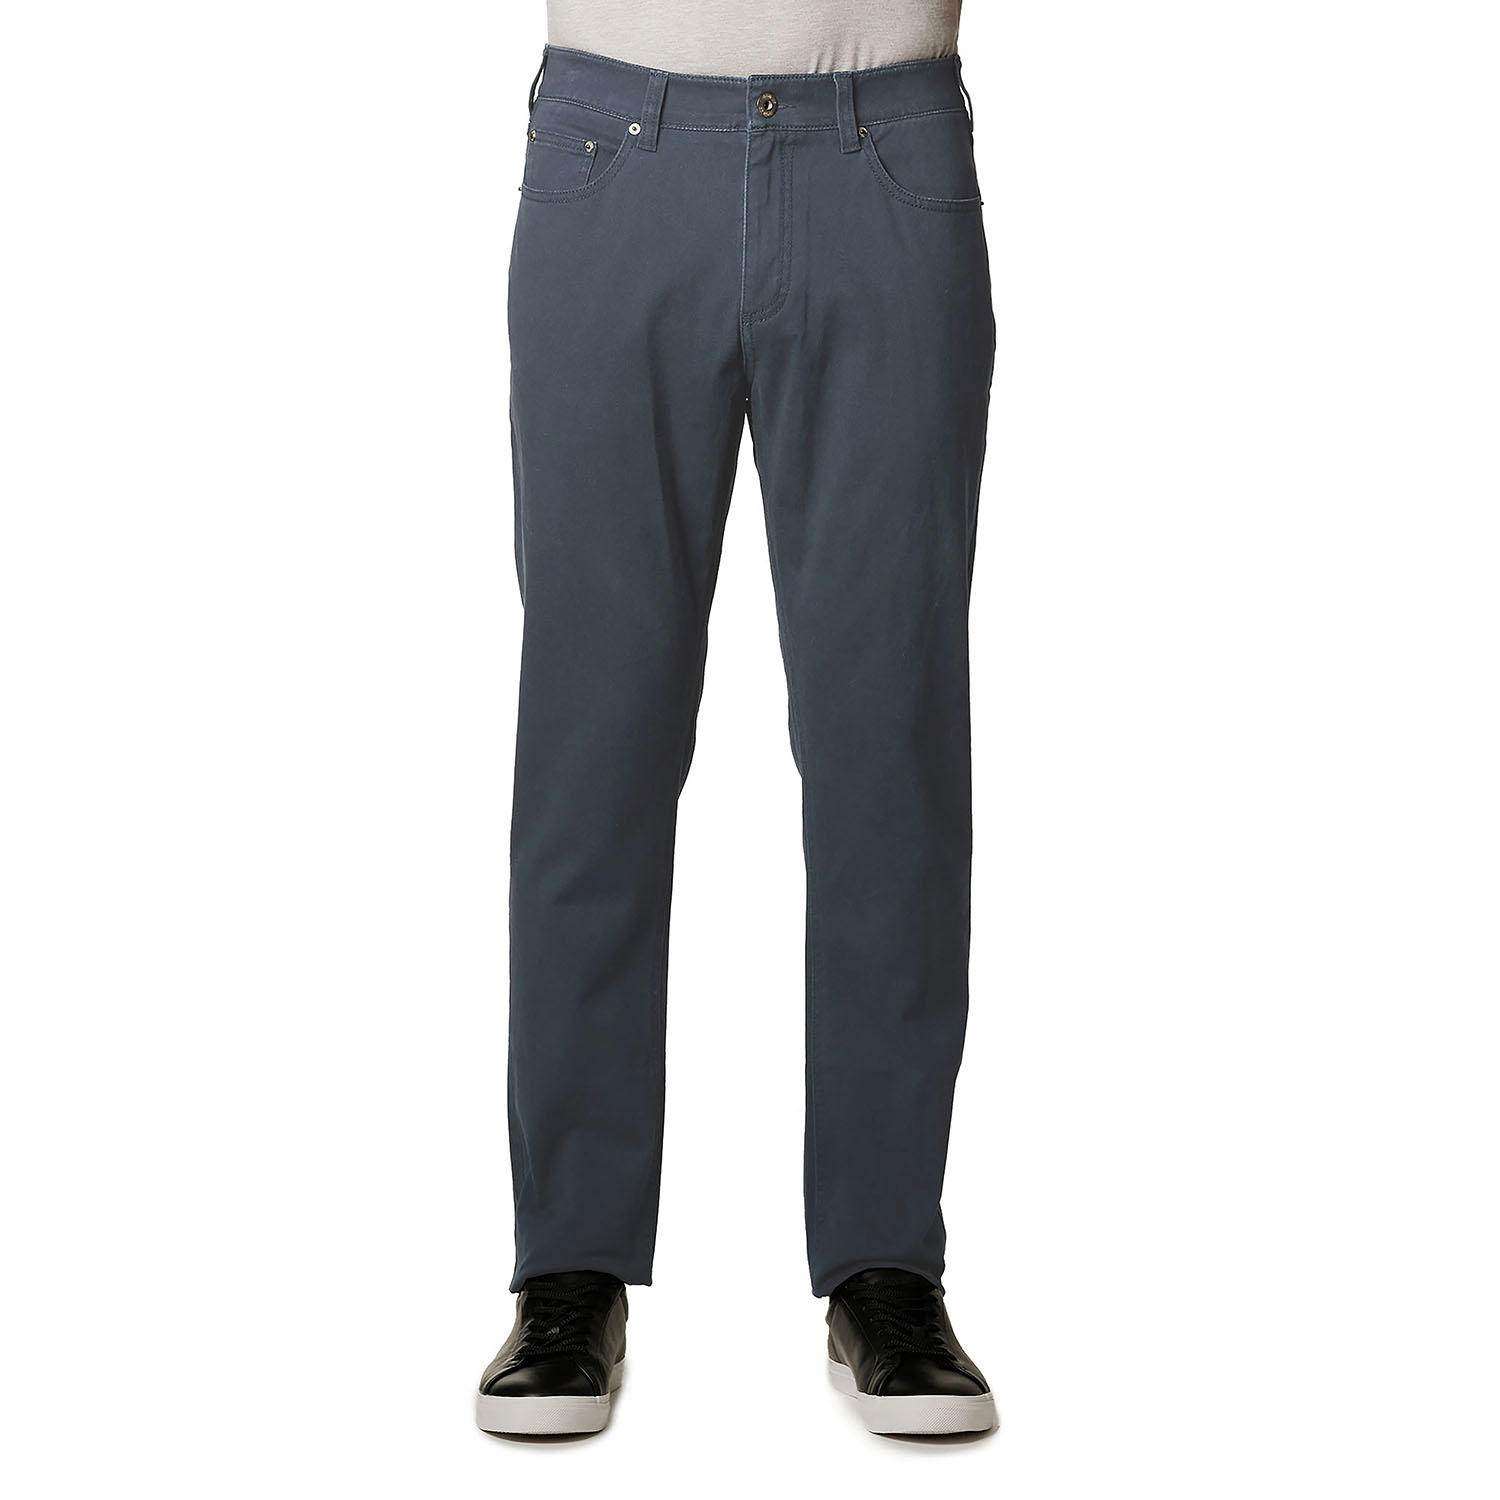 IRON Clothing PATRIOT Comfort Flex Waistband 5 Pocket Stretch Twill Pant - Blue Smoke 36x32